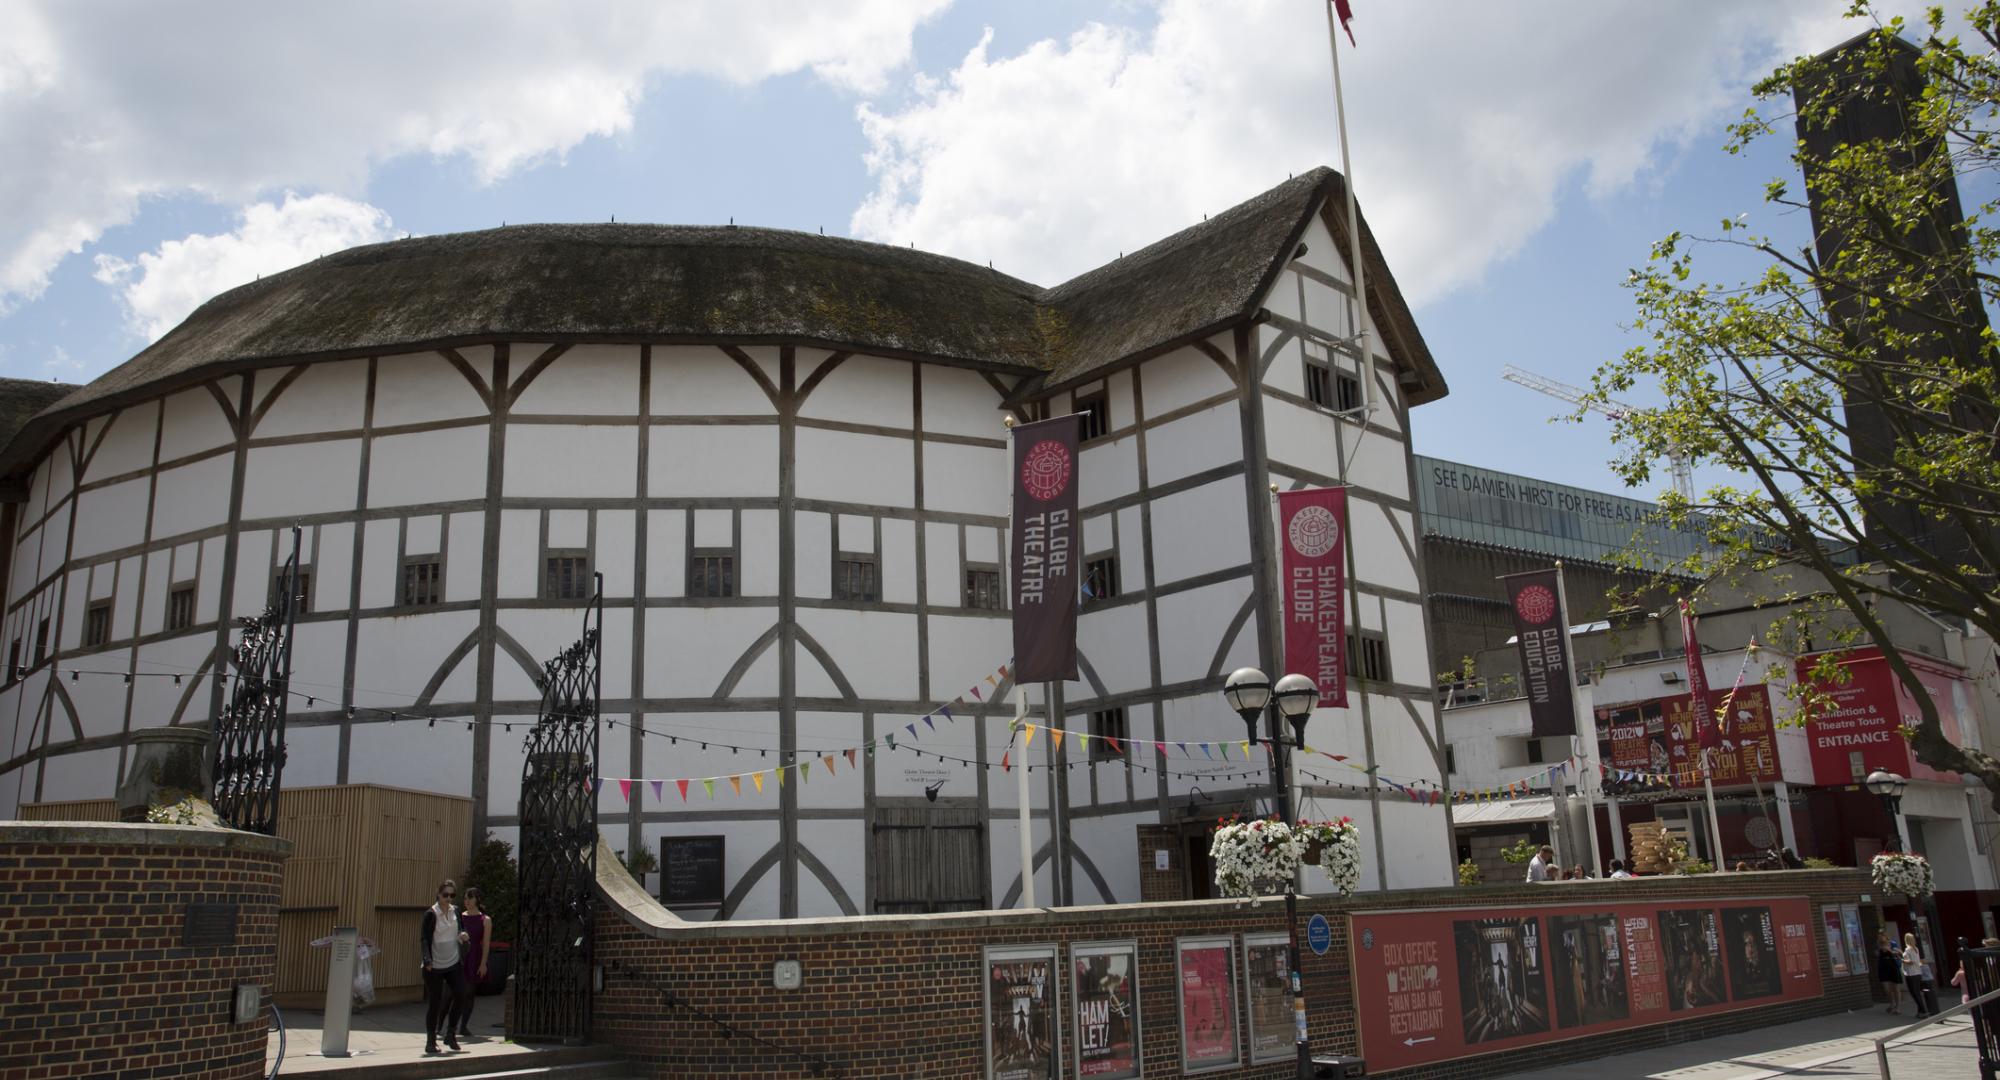 Shakespeare's Globe in London.